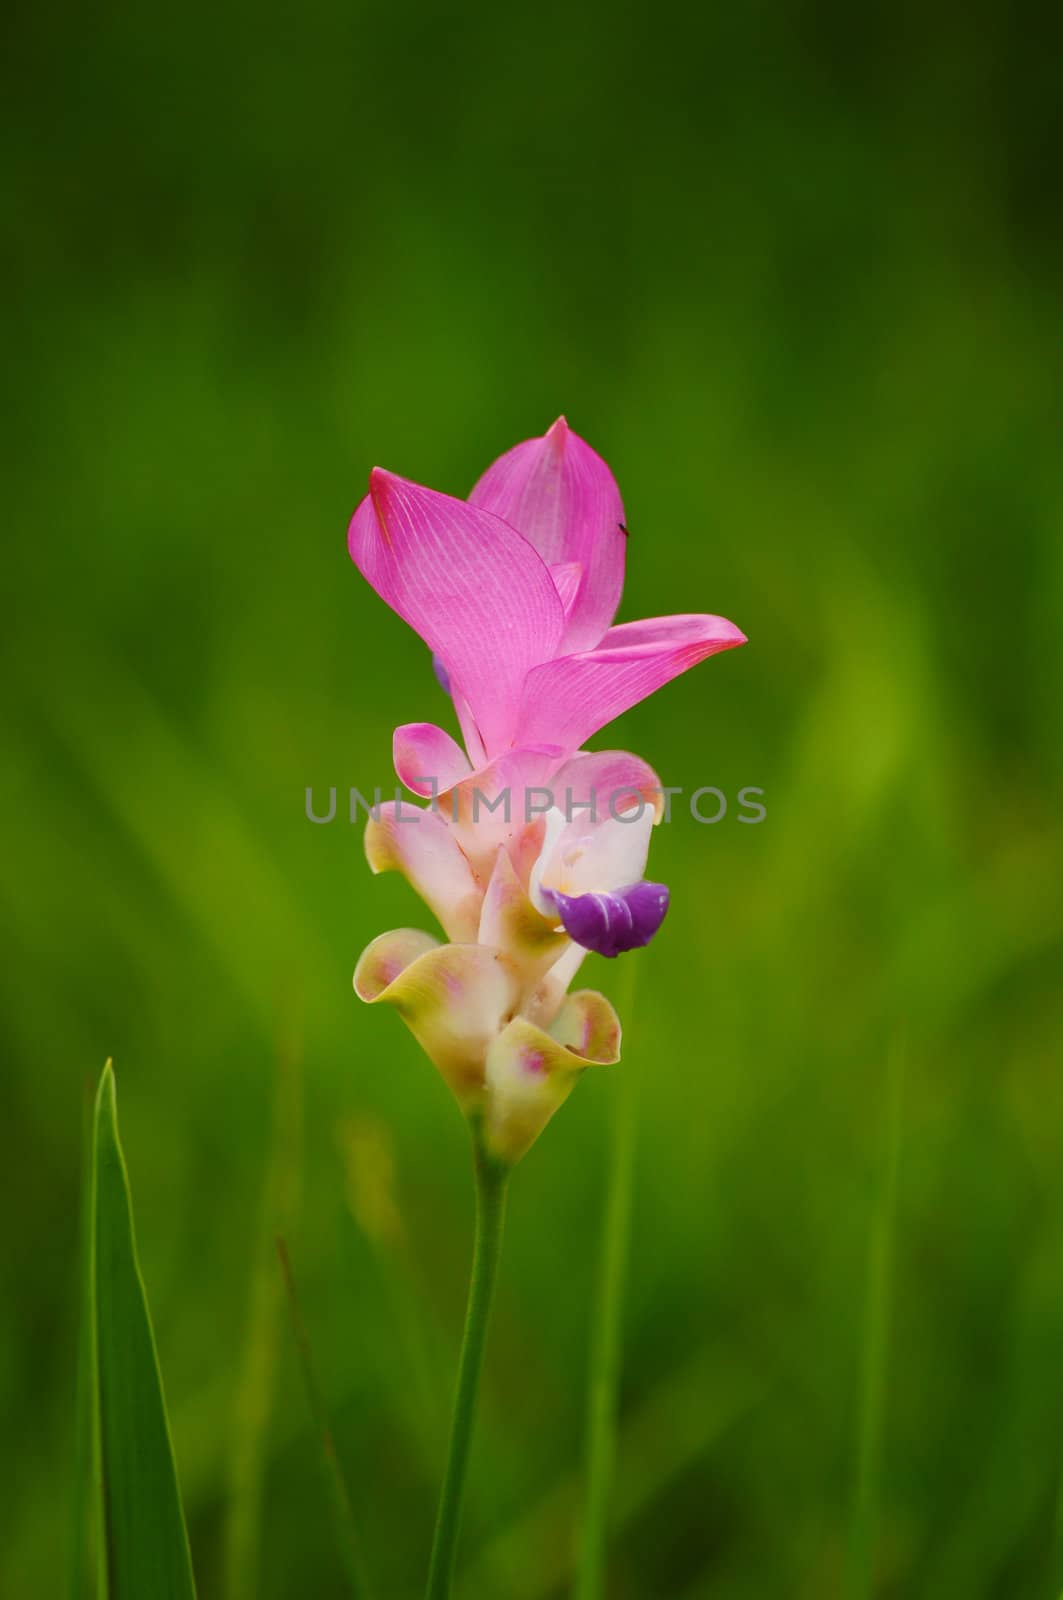 Siam Tulip Flower in Thailand by samurai